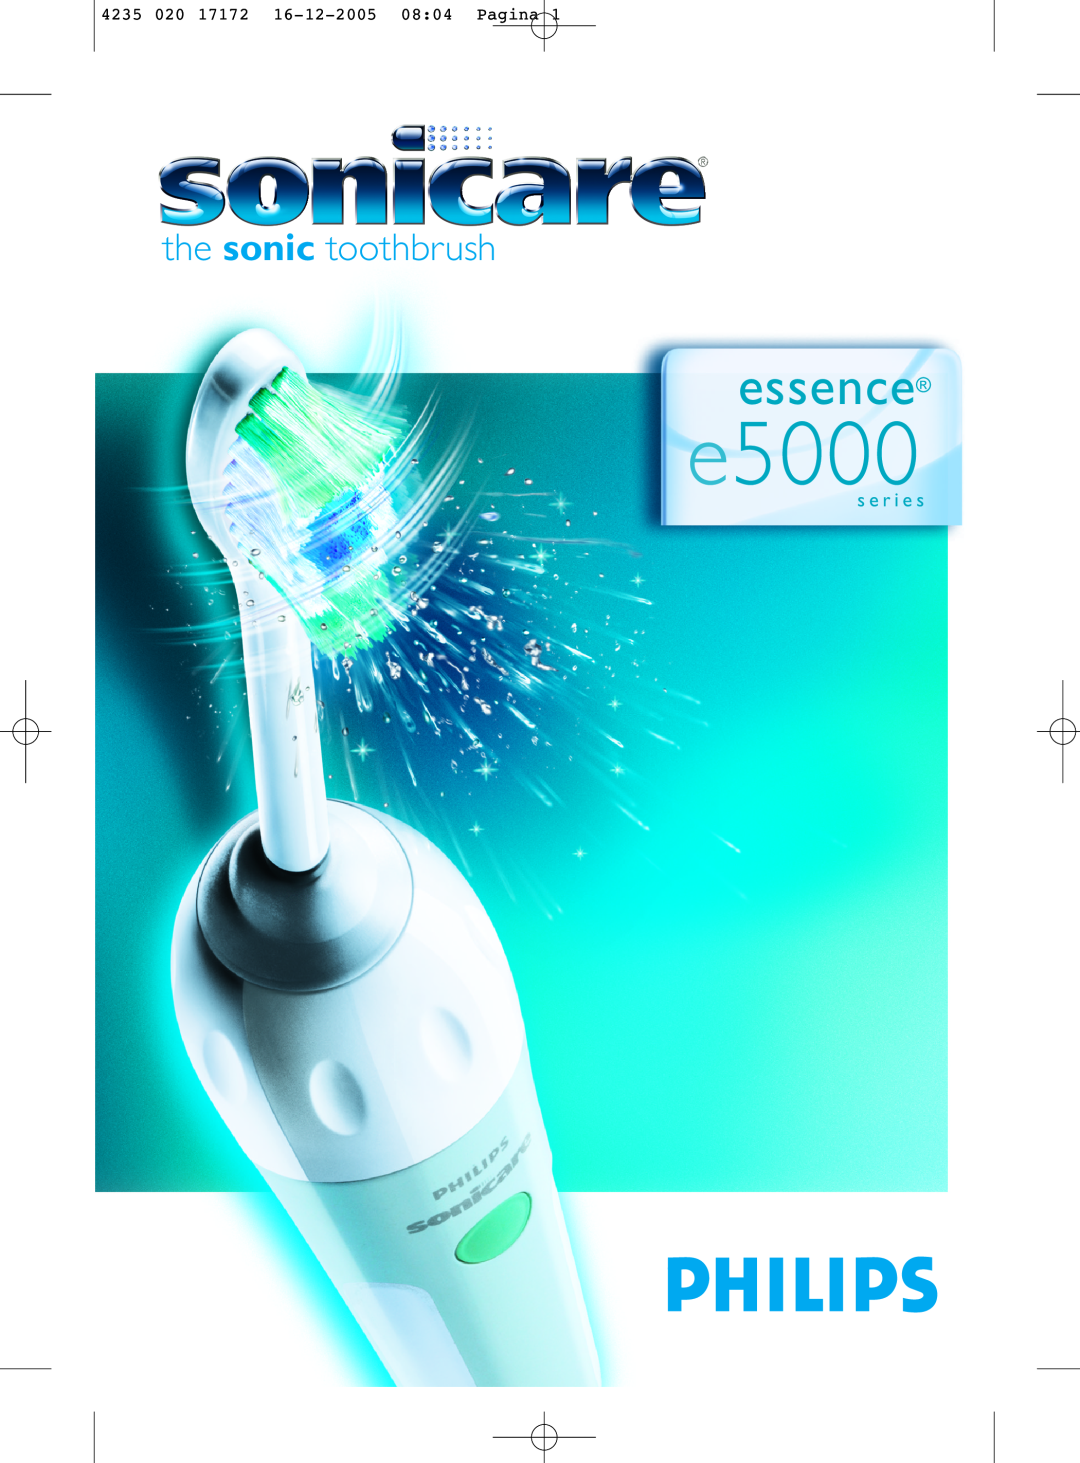 Sonicare e5000 manual essence, the sonic toothbrush, s e r i e s, 4235 020 17172 16-12-2005 0804 Pagina 